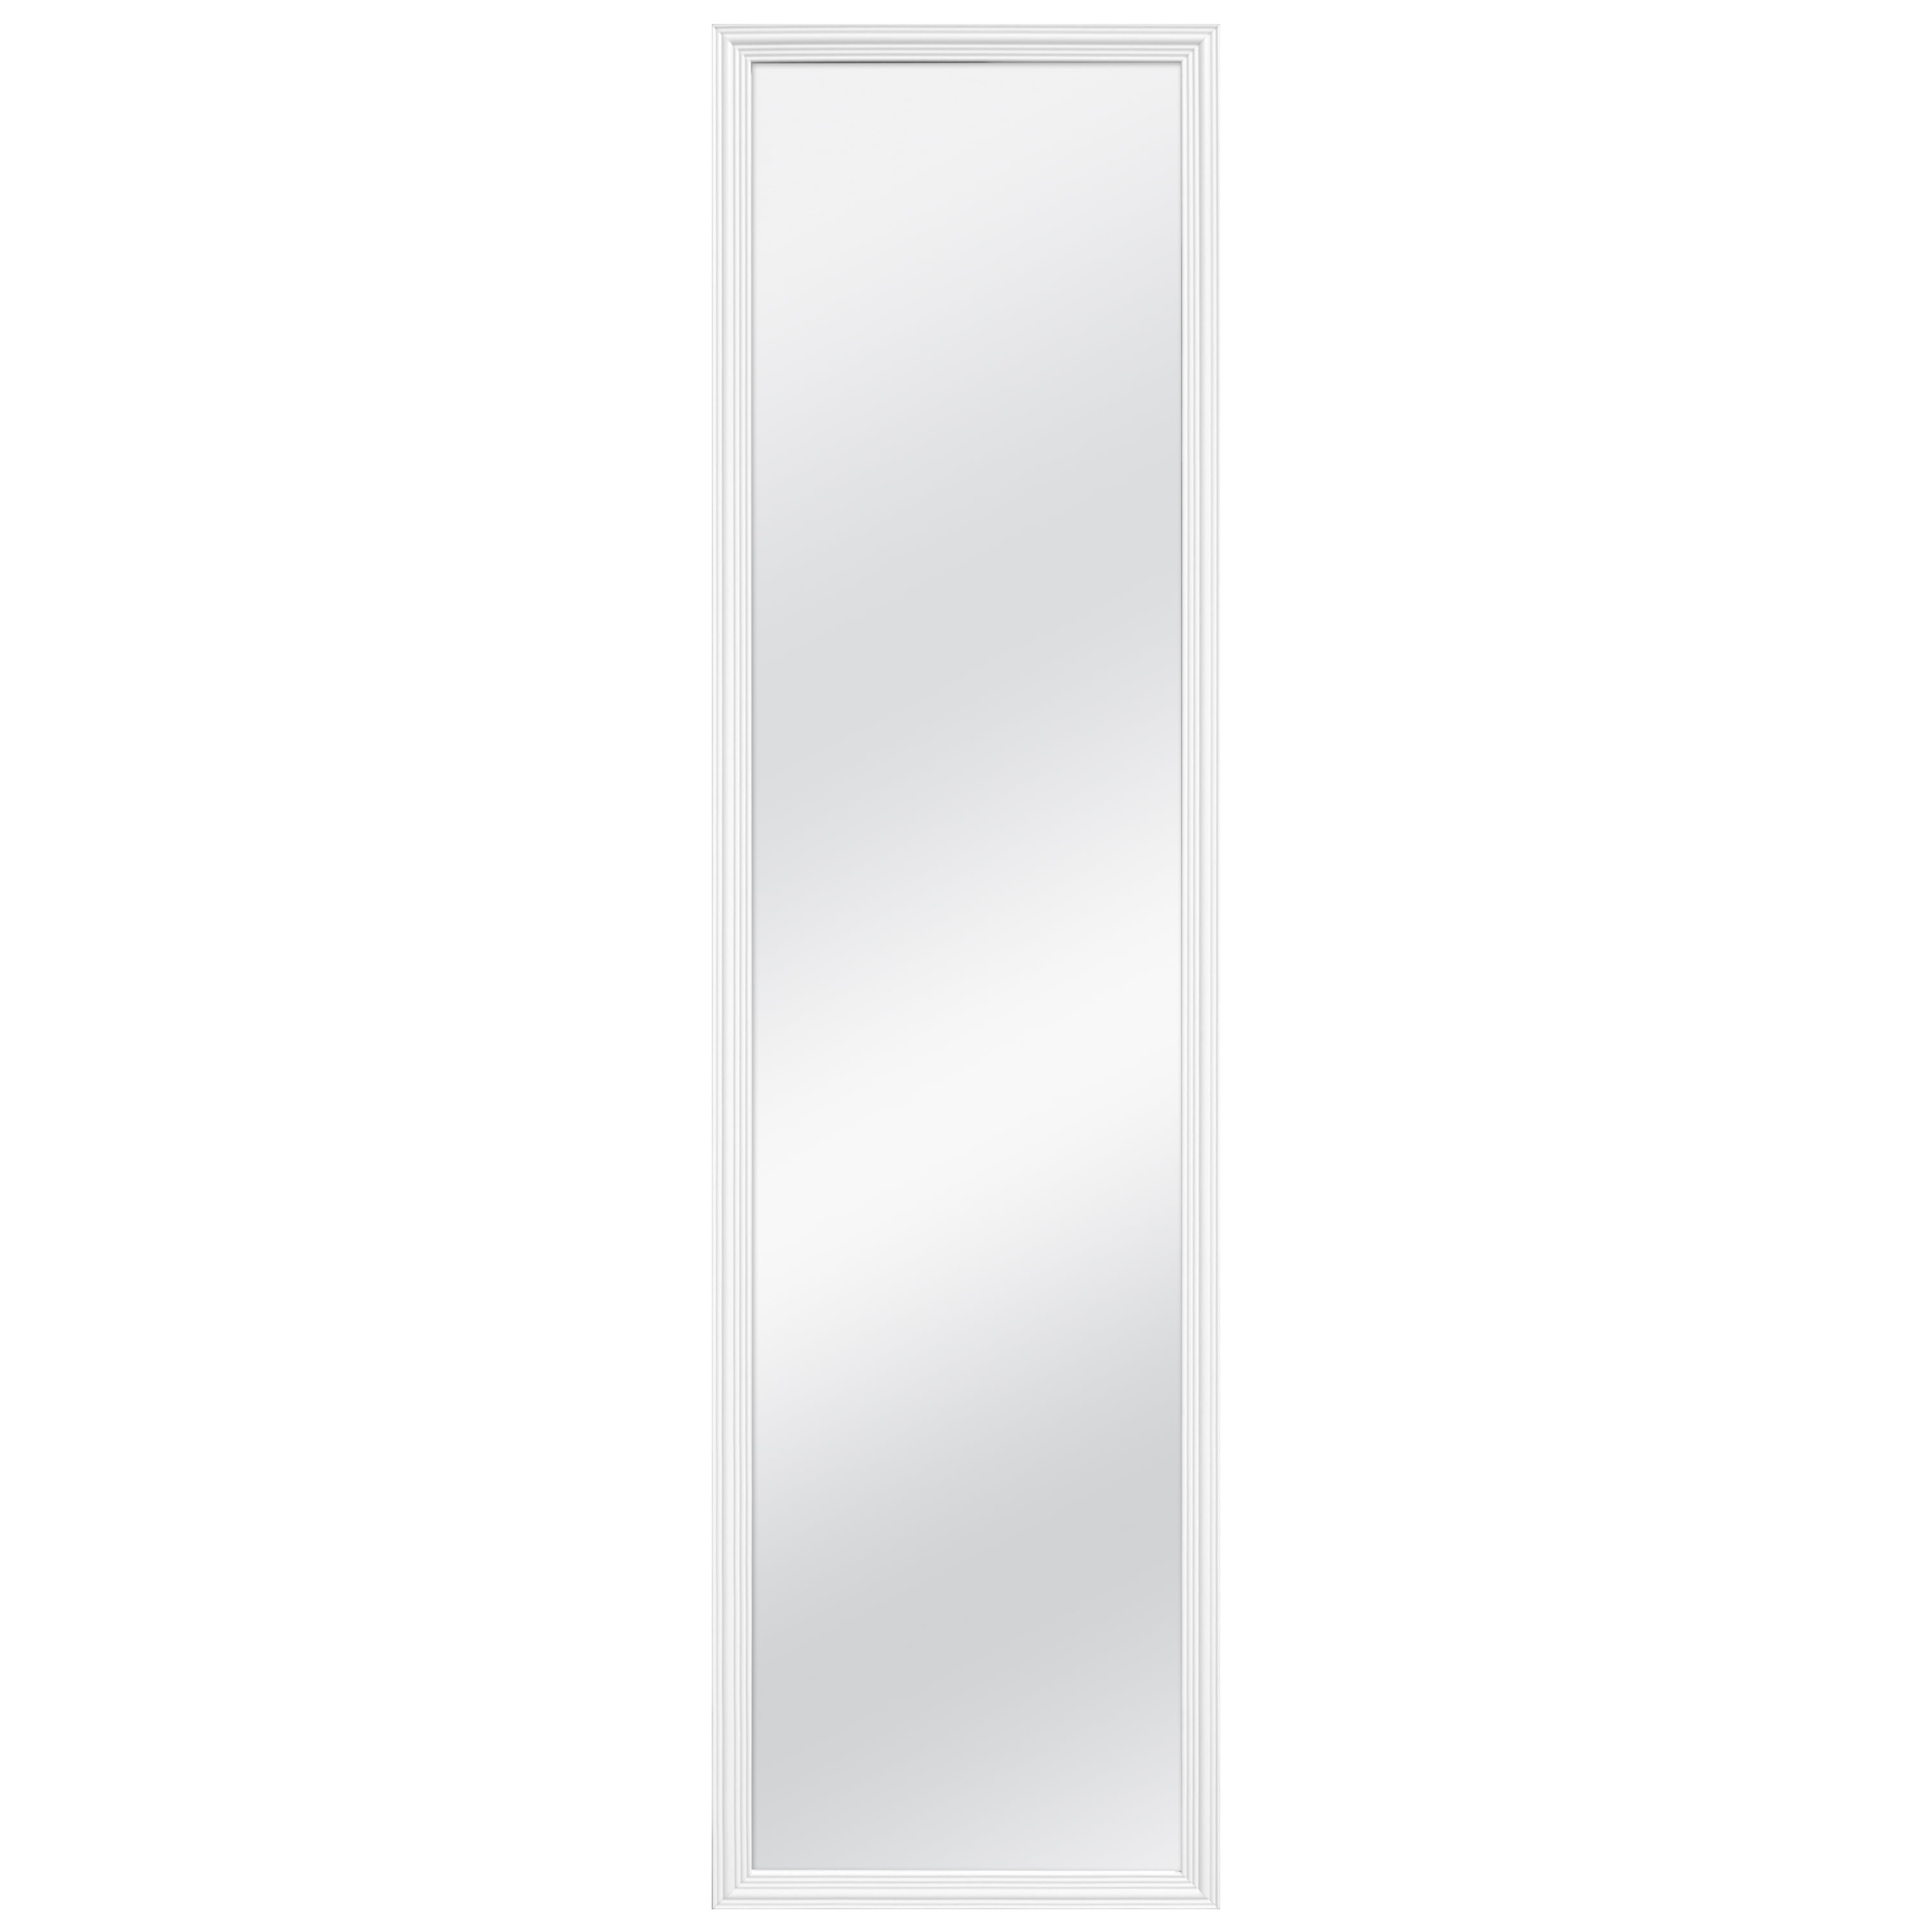 Mainstays Door Mirror, 13.38IN X 49.38IN, White Finish